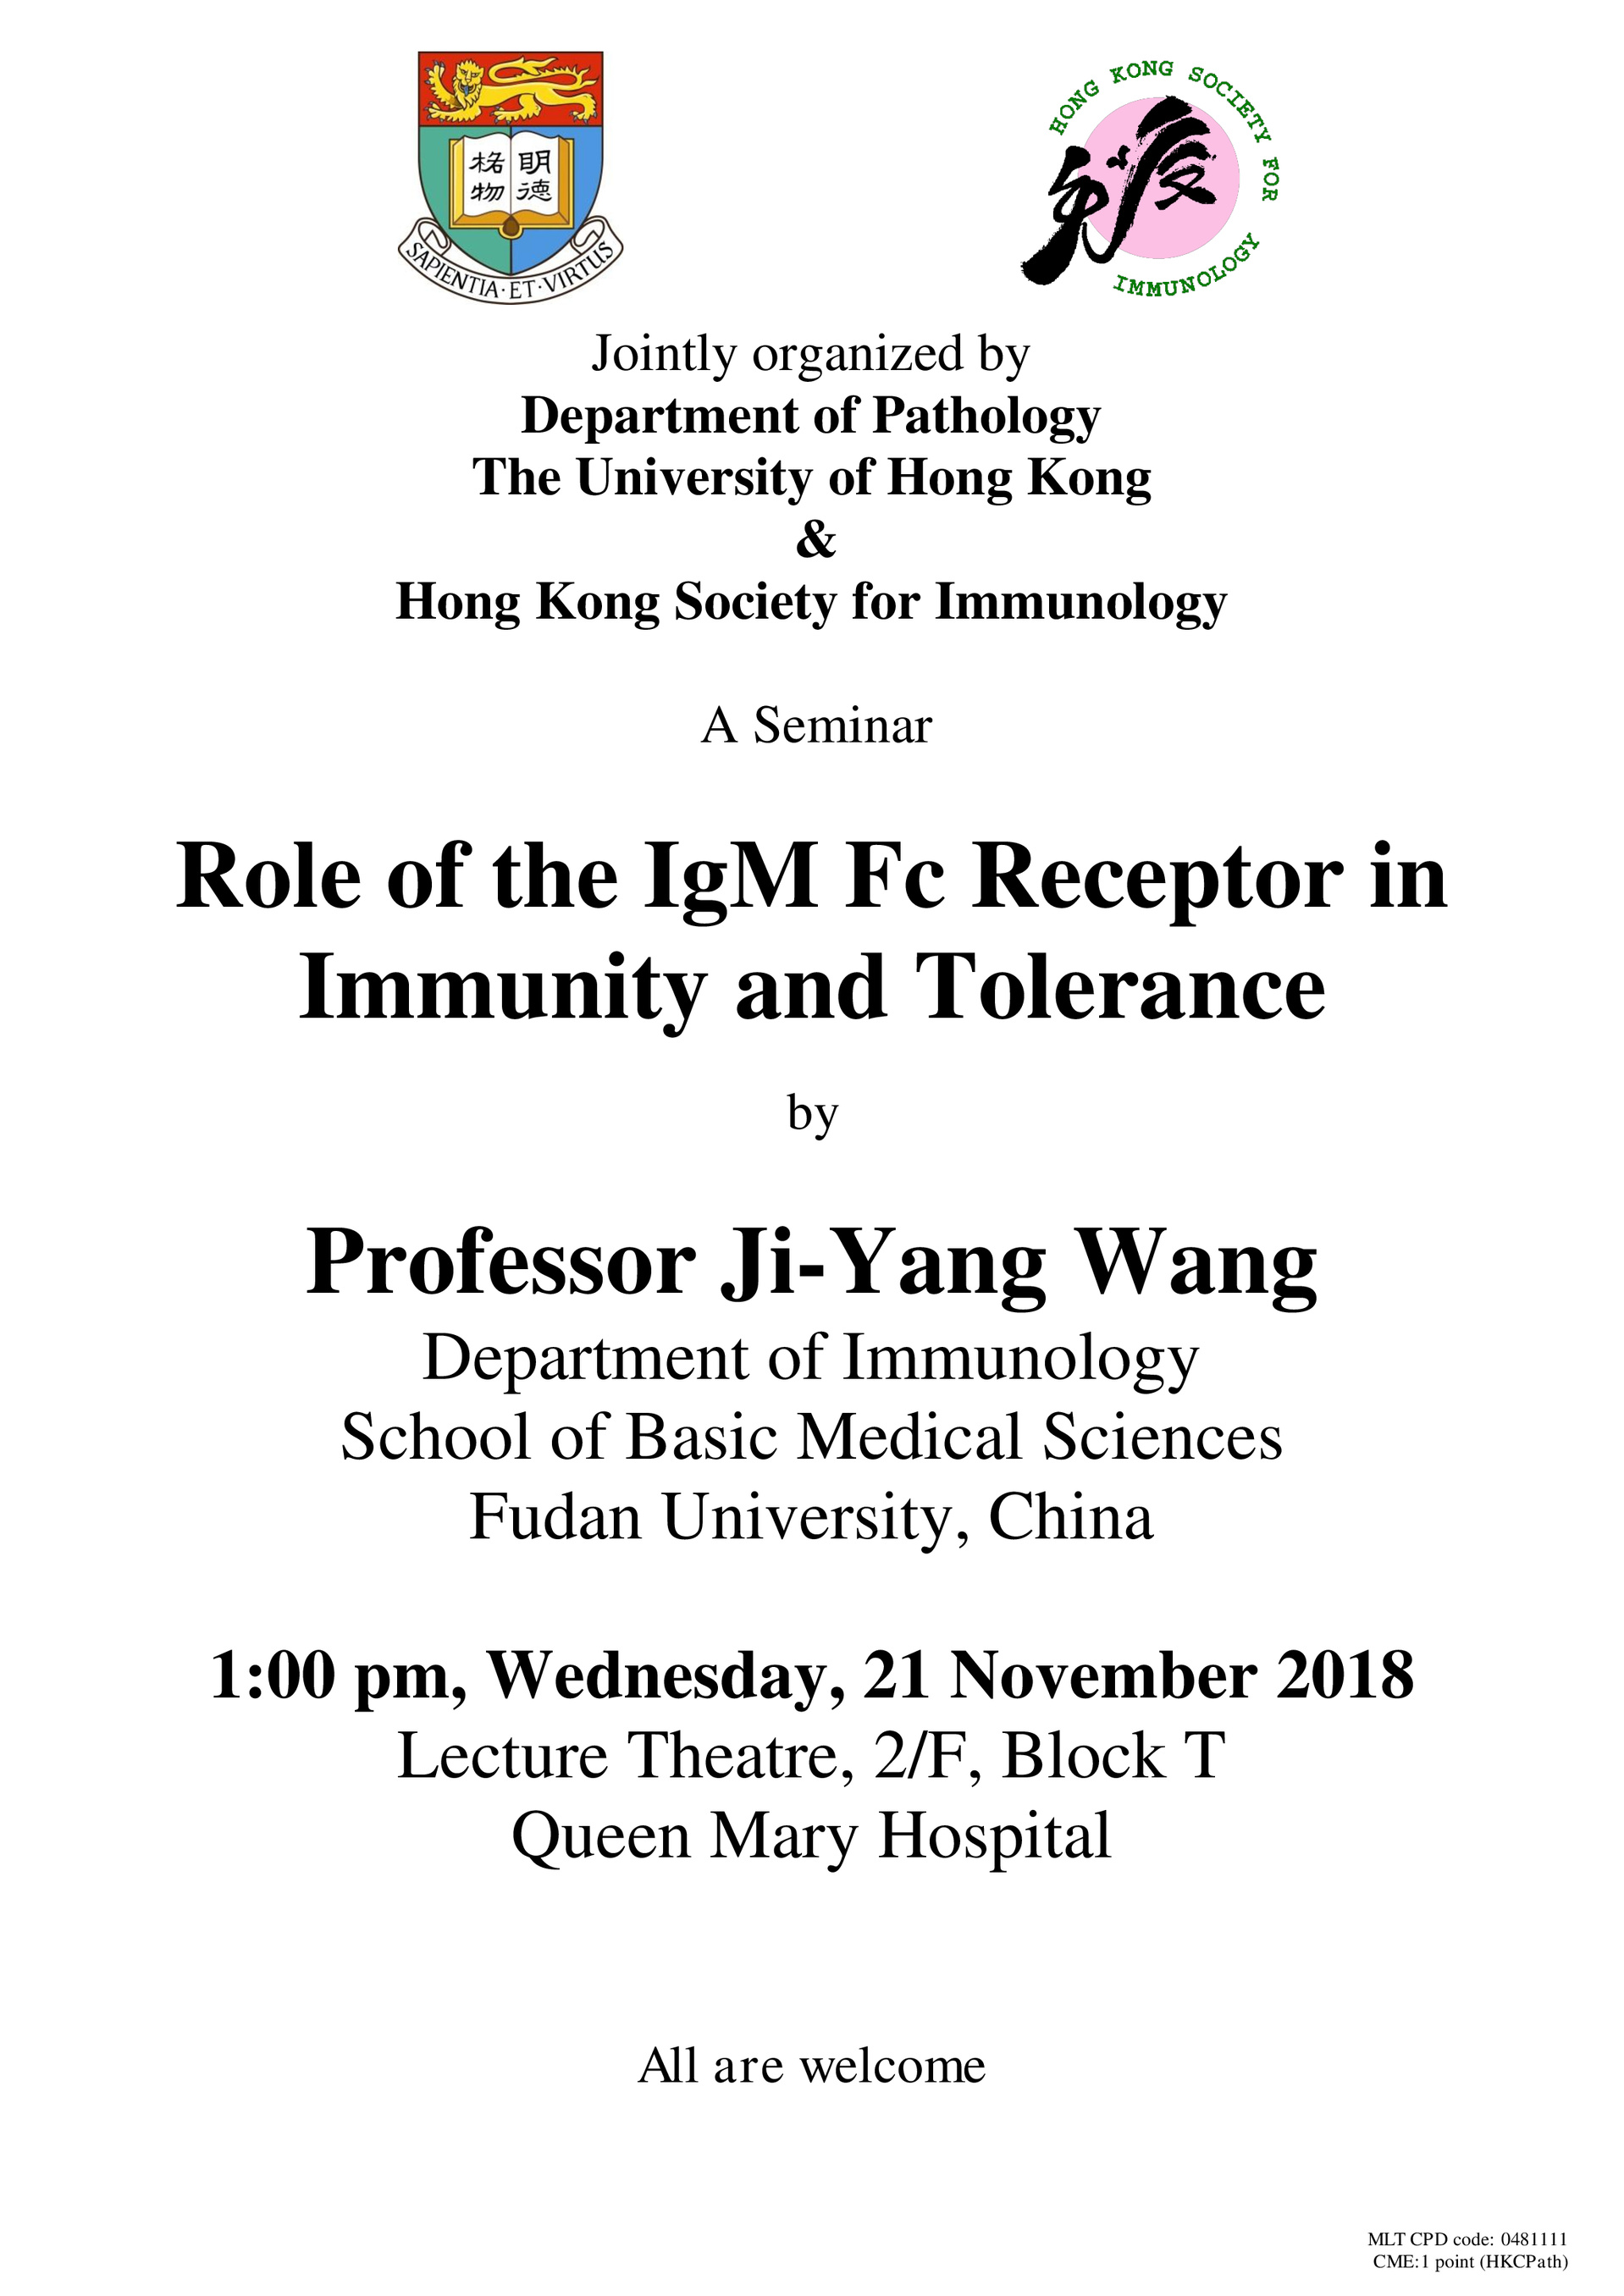 A Seminar by Prof Ji-Yang Wang on 21 Nov (1pm)